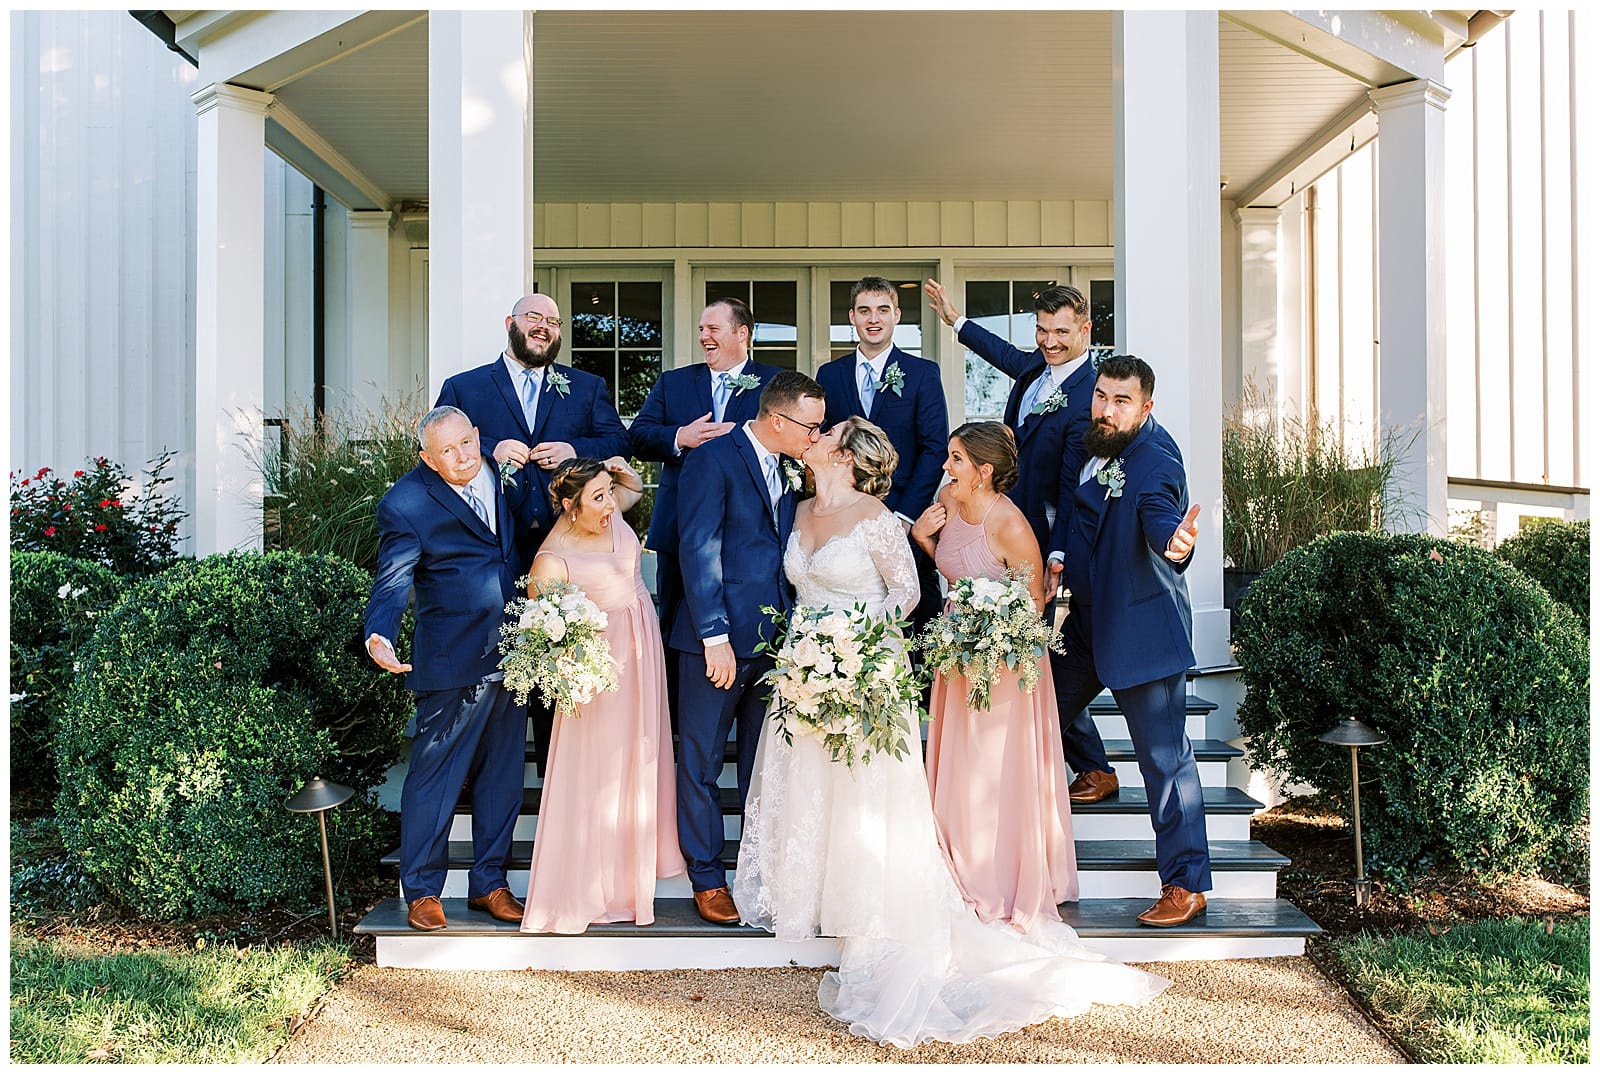 Danielle-Defayette-Photography-Castle-Hill-Cider-Charlottesville-Wedding-2020_0043.jpg